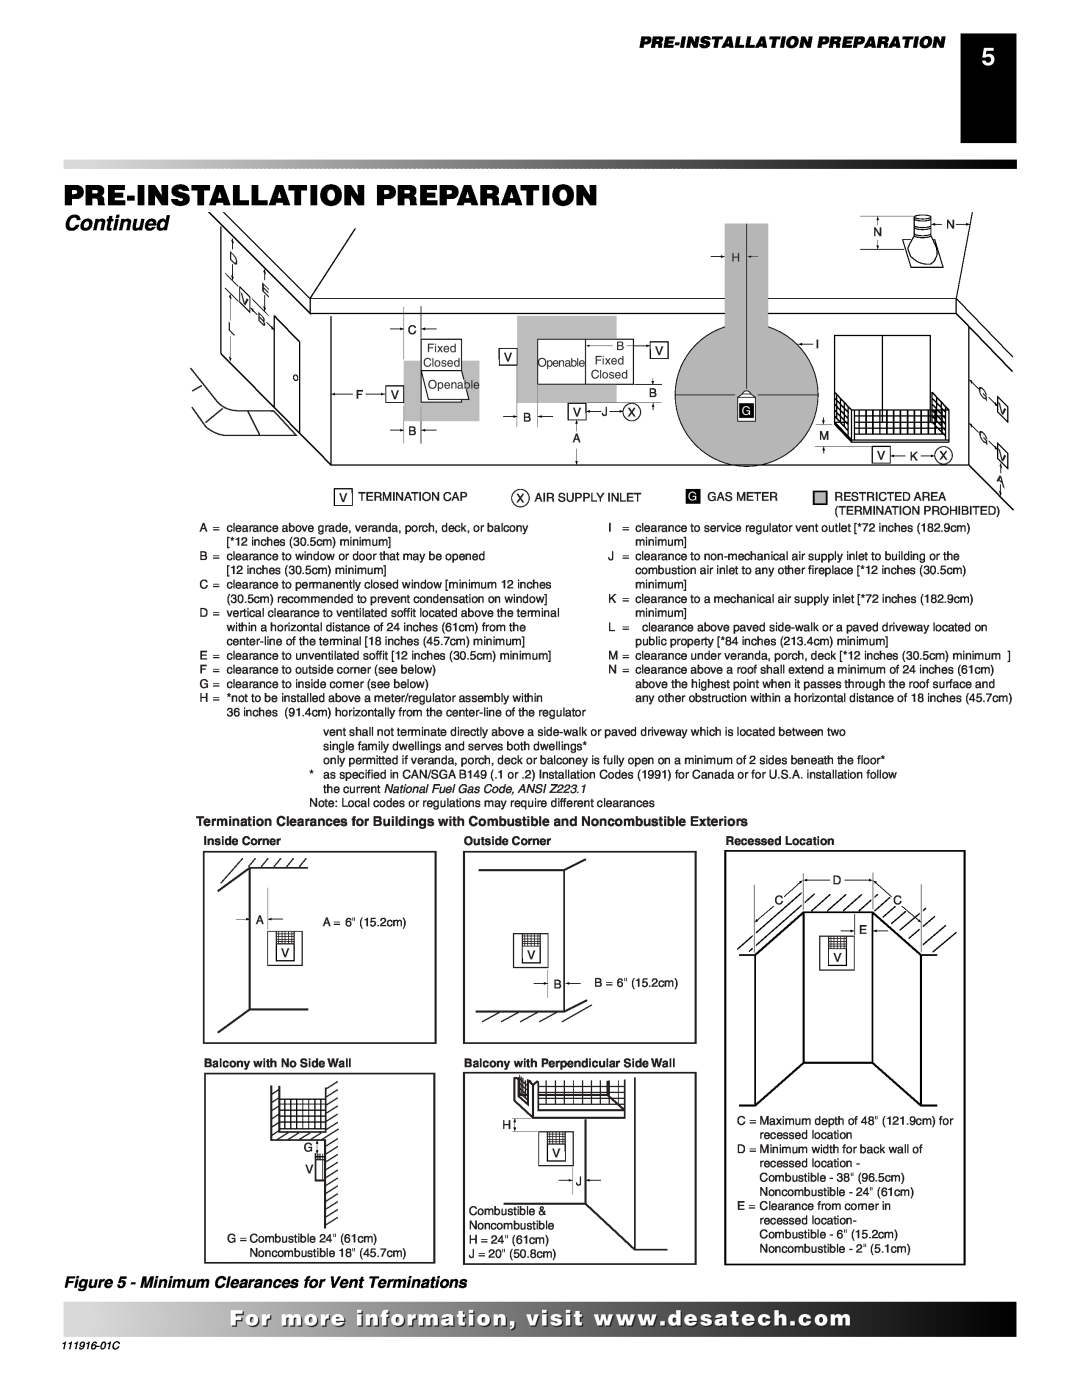 Desa CD32M (-1)(-2) Pre-Installationpreparation, D E V B L, V G V A, Continued, Inside Corner, Outside Corner 